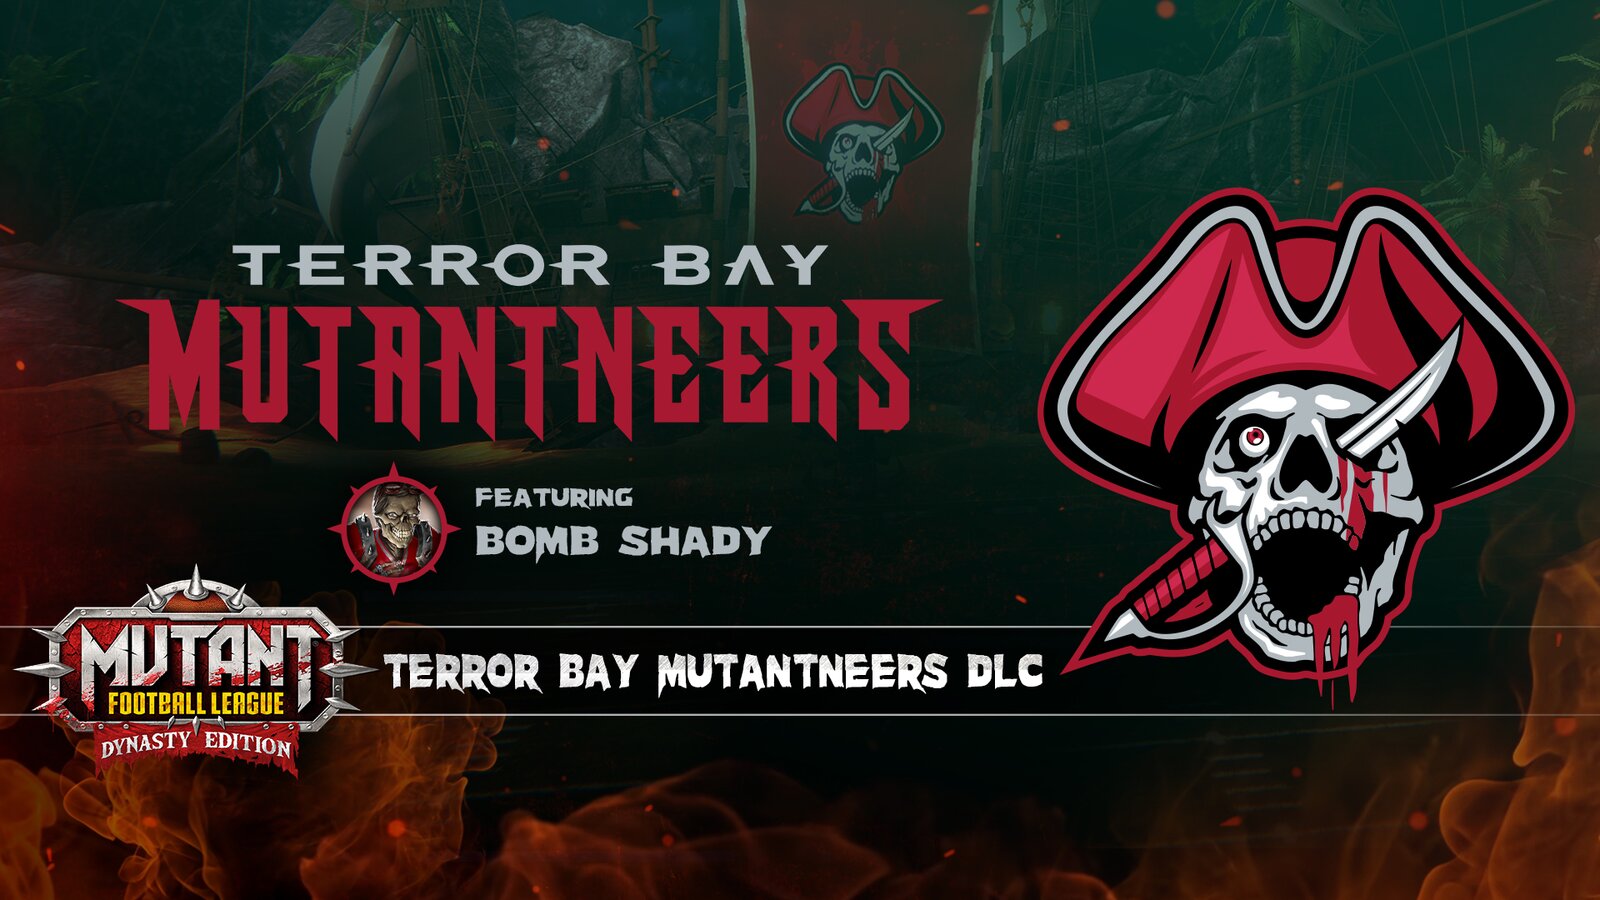 Mutant Football League - Terror Bay Mutantneers